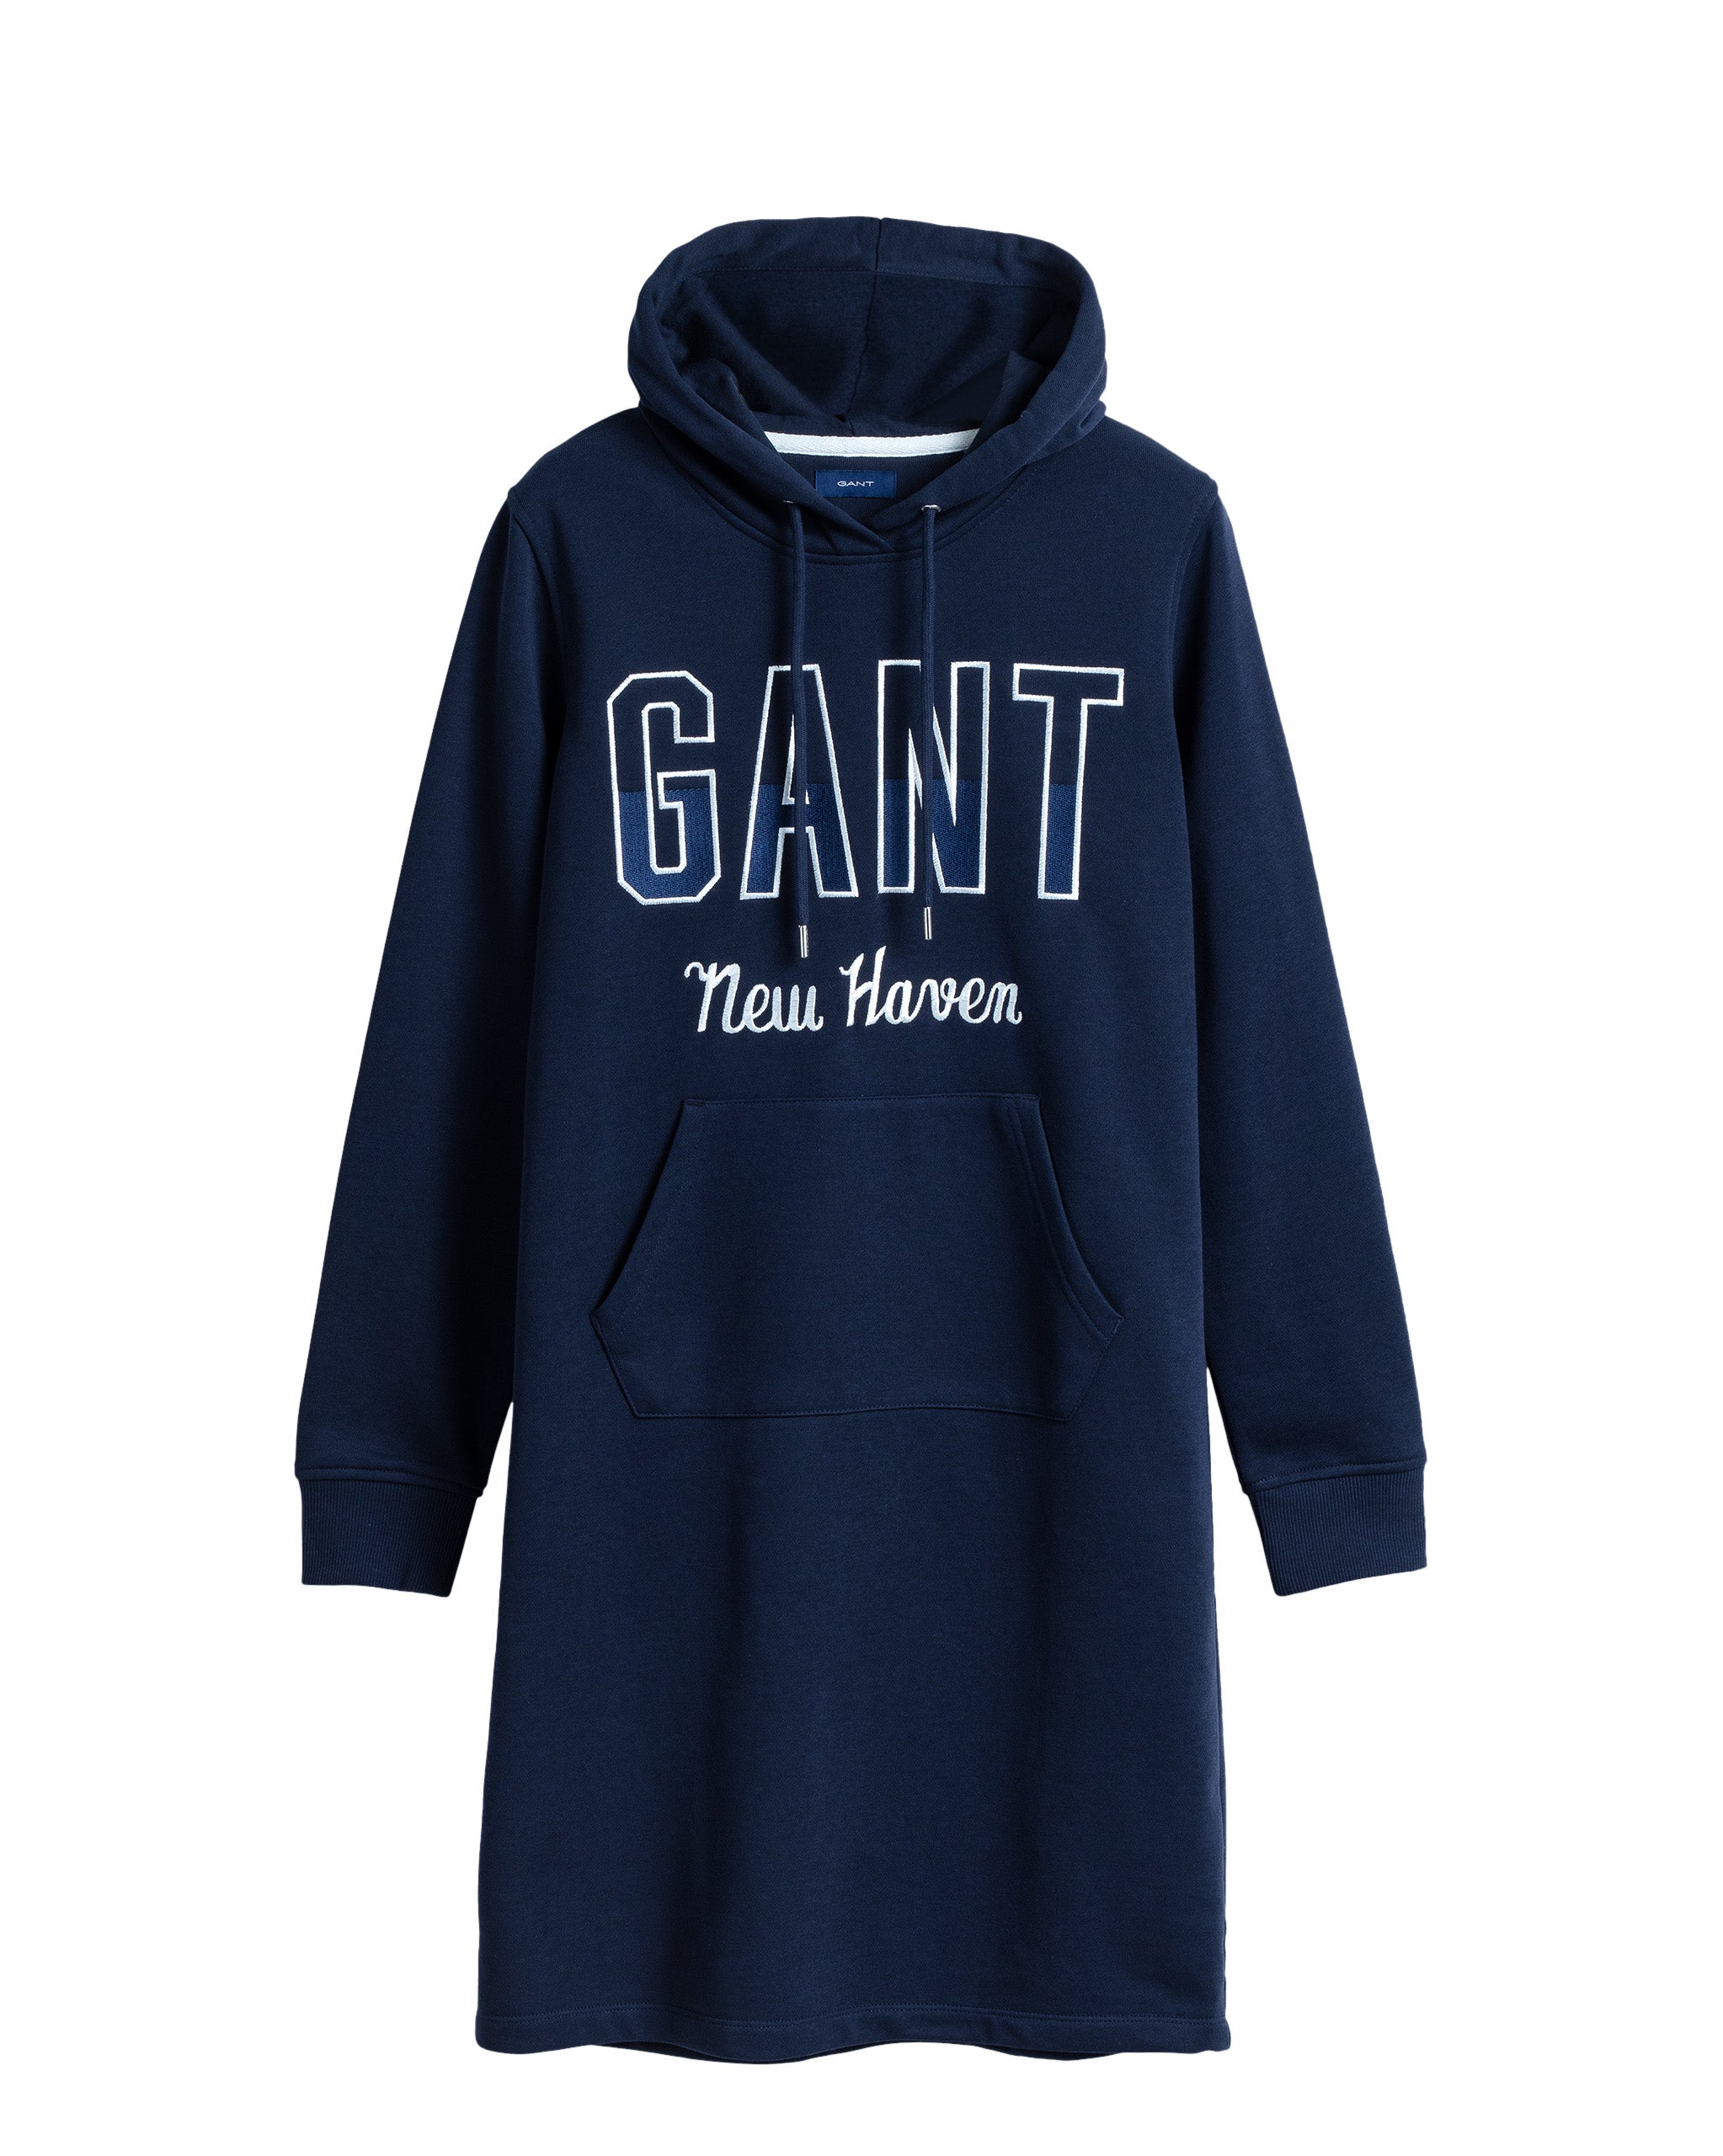 Gant N.H Hoodie dress - Evening Blue - GANT - Kjoler - VILLOID.no